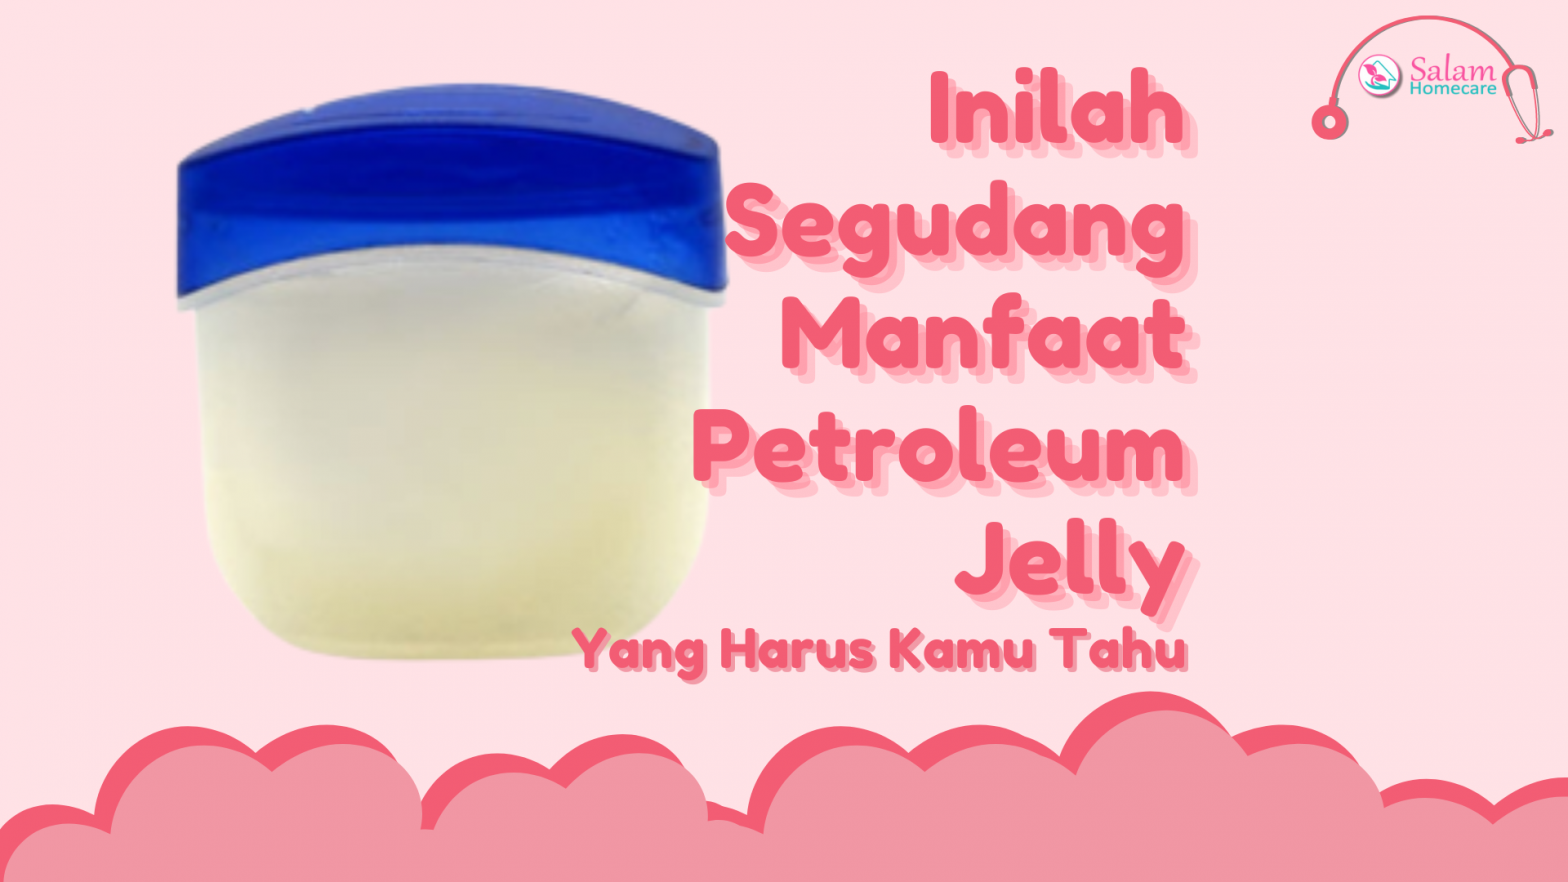 Manfaat Petroleum Jelly